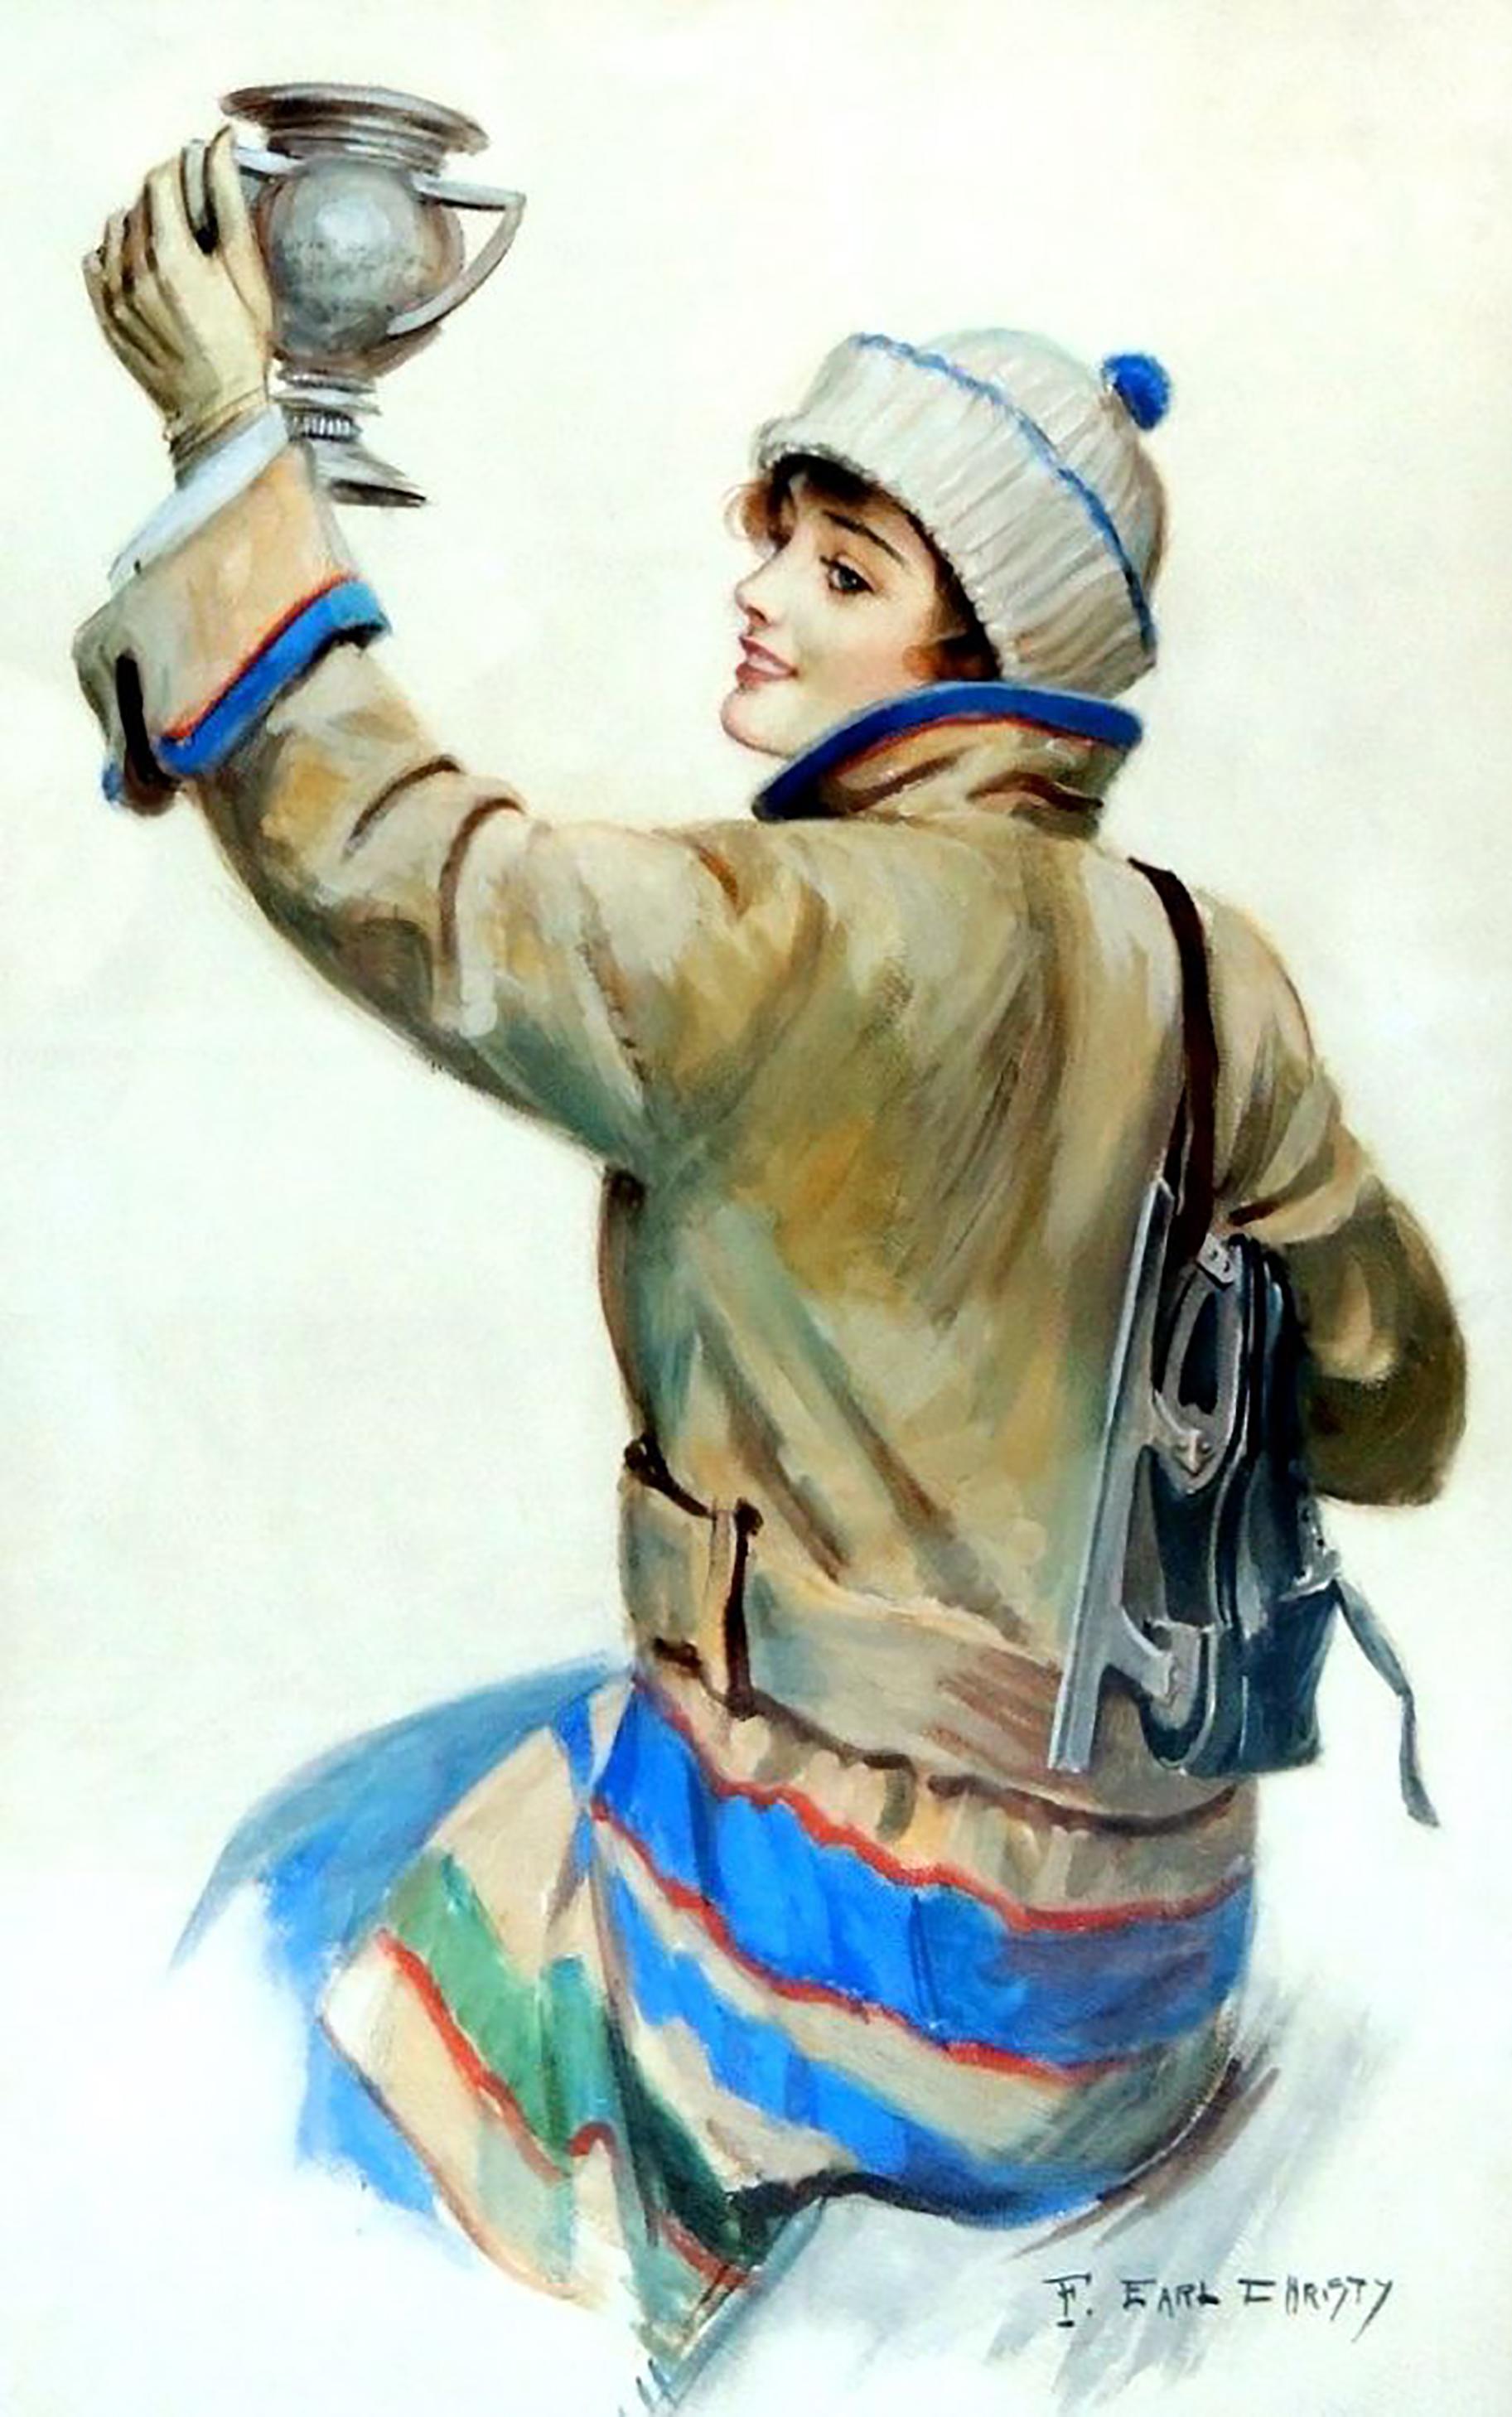 F. Earl Christy Figurative Art – Skating Woman, Kalender Illustration der amerikanischen Kunstwerke, 1917